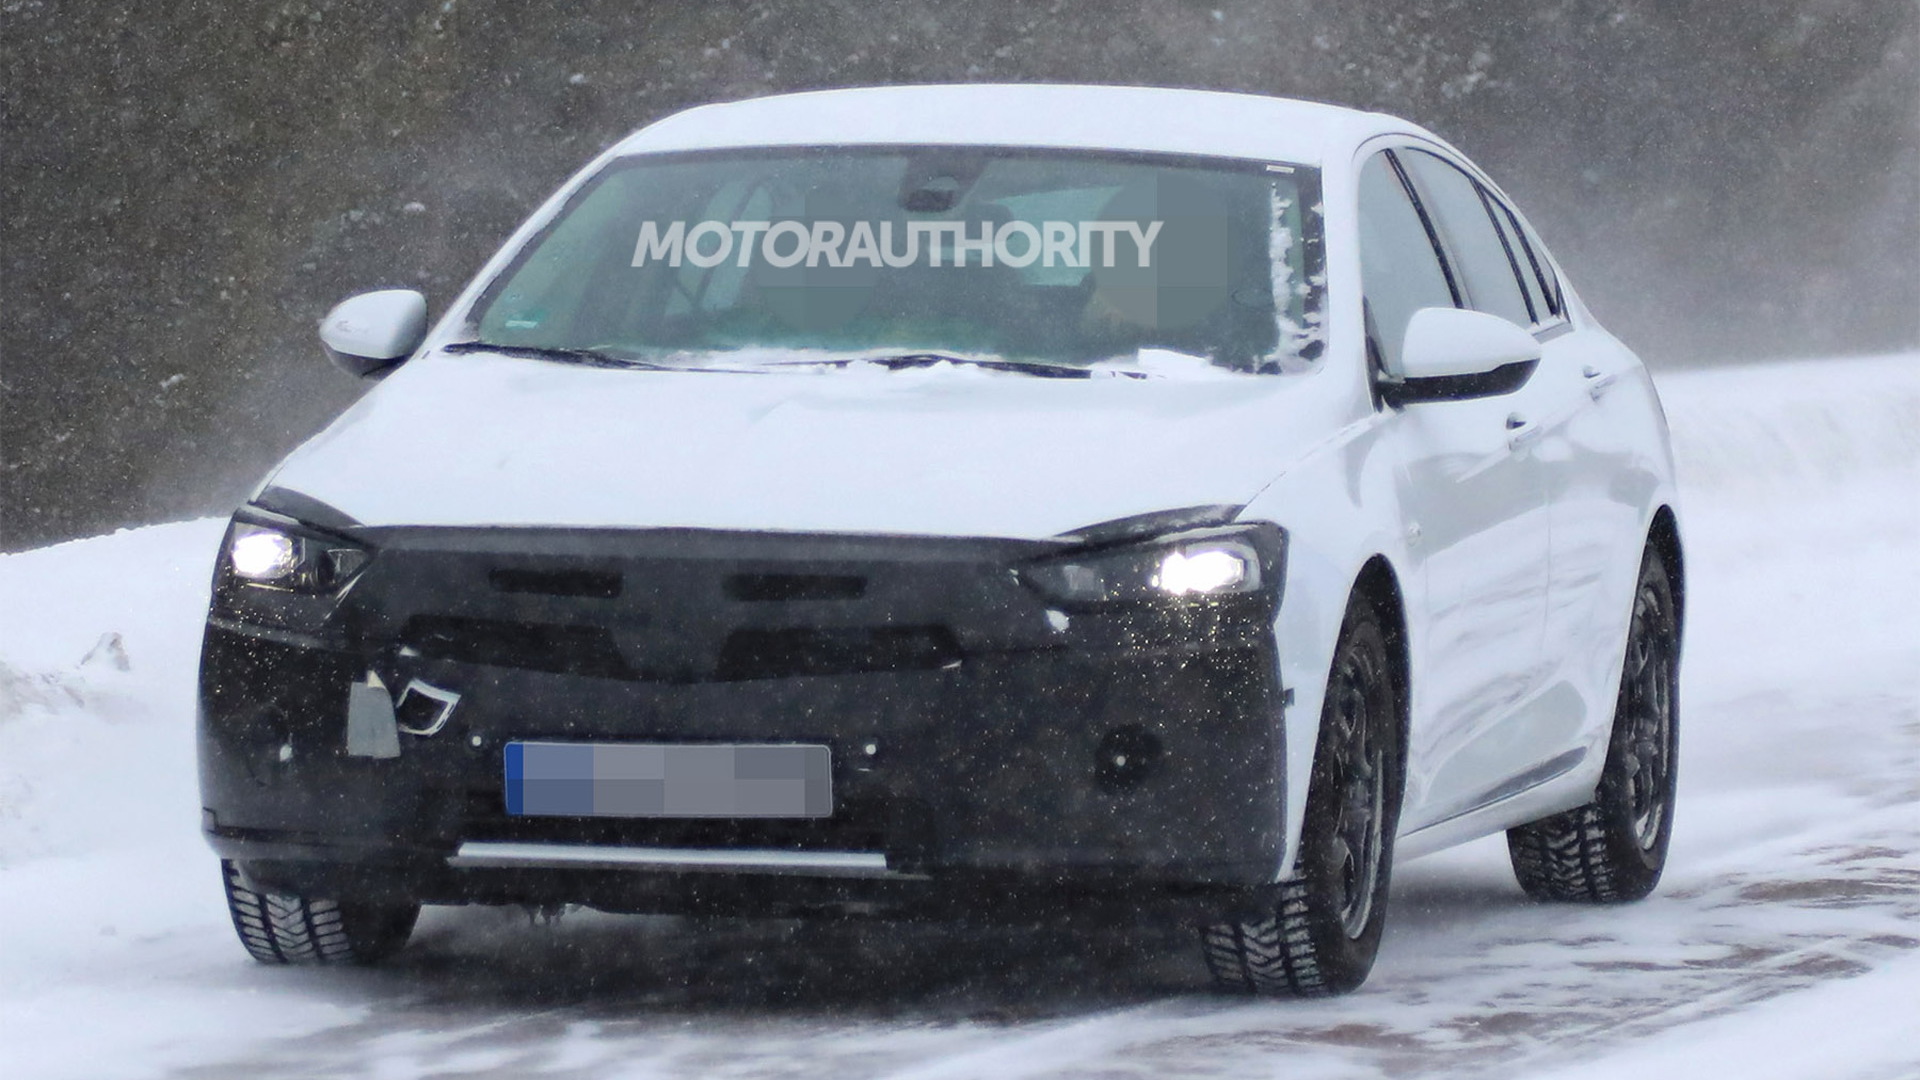 2020 Opel Insignia facelift spy shots - Image via S. Baldauf/SB-Medien